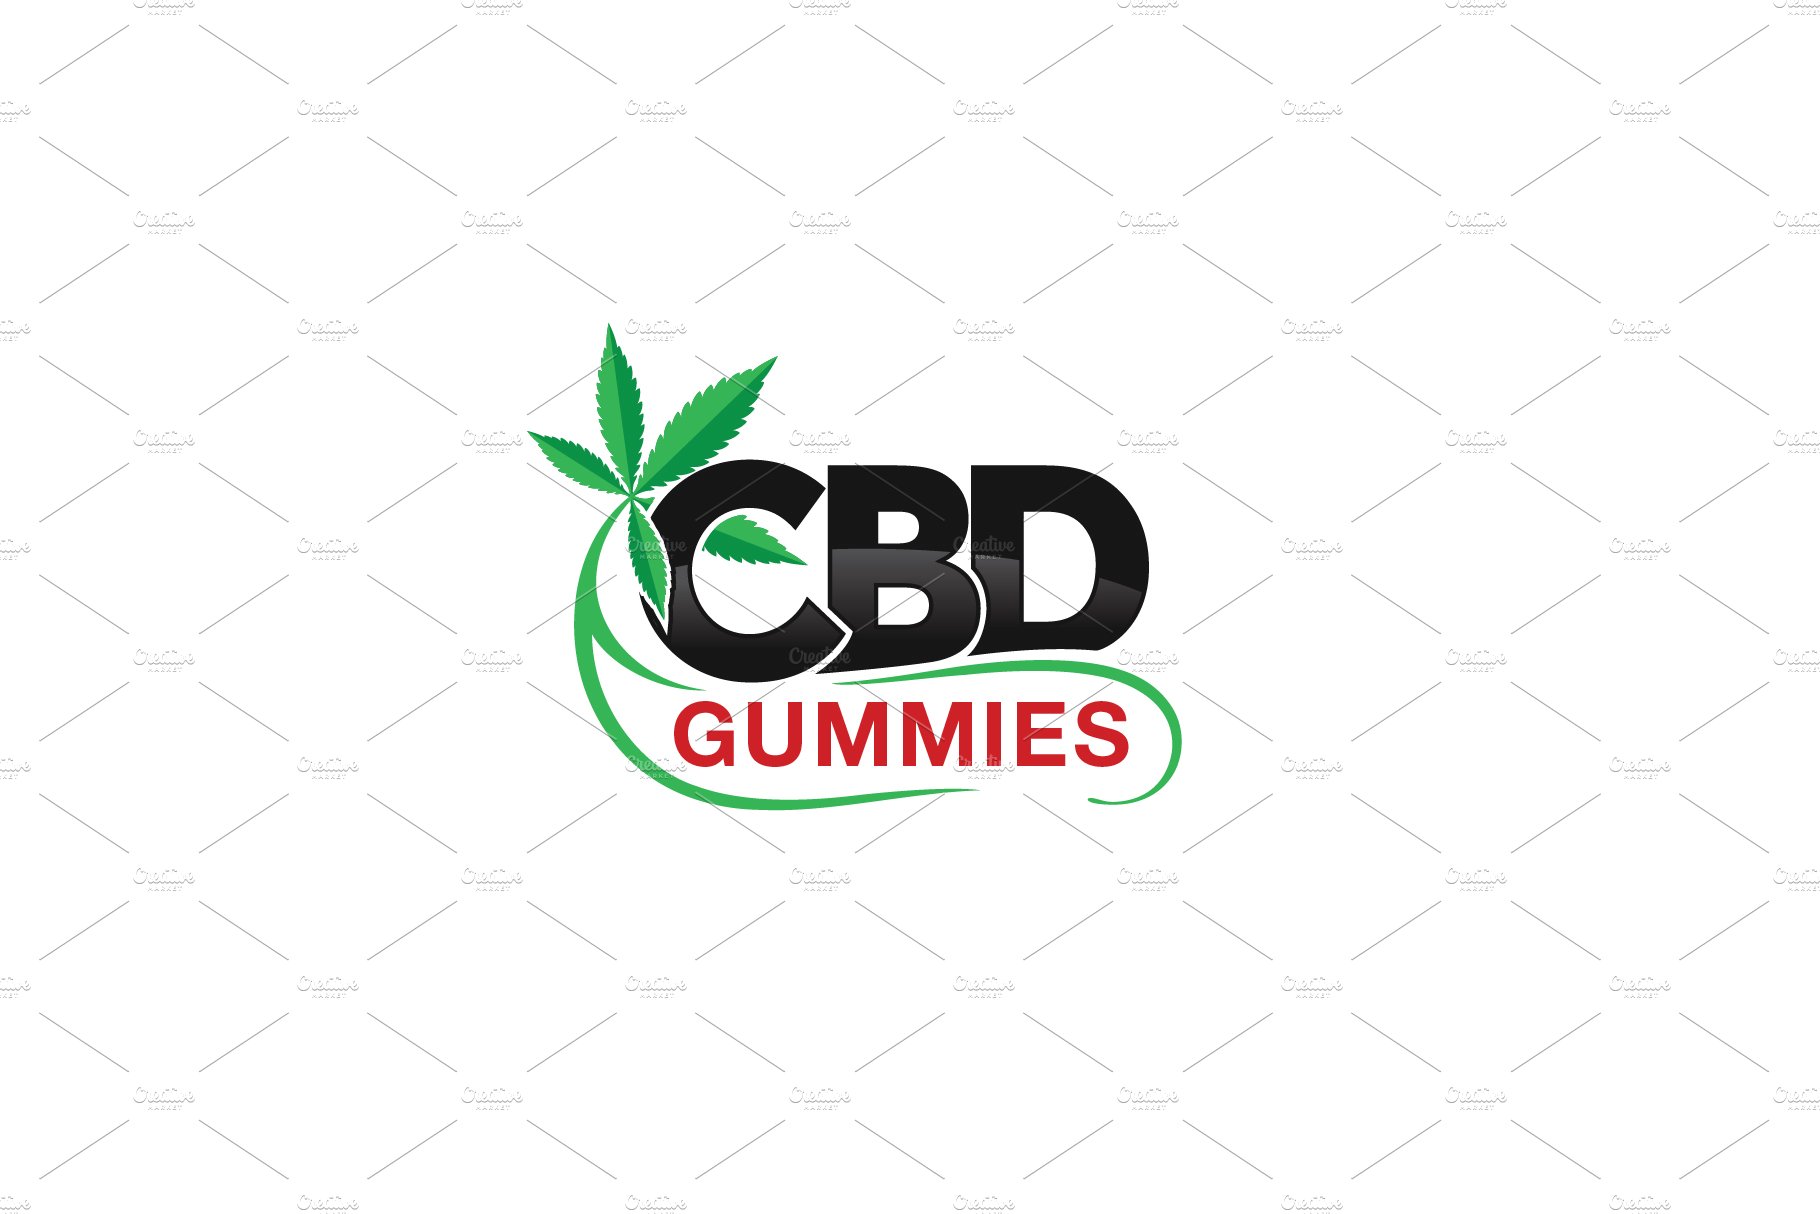 CBD Gummies Logo cover image.